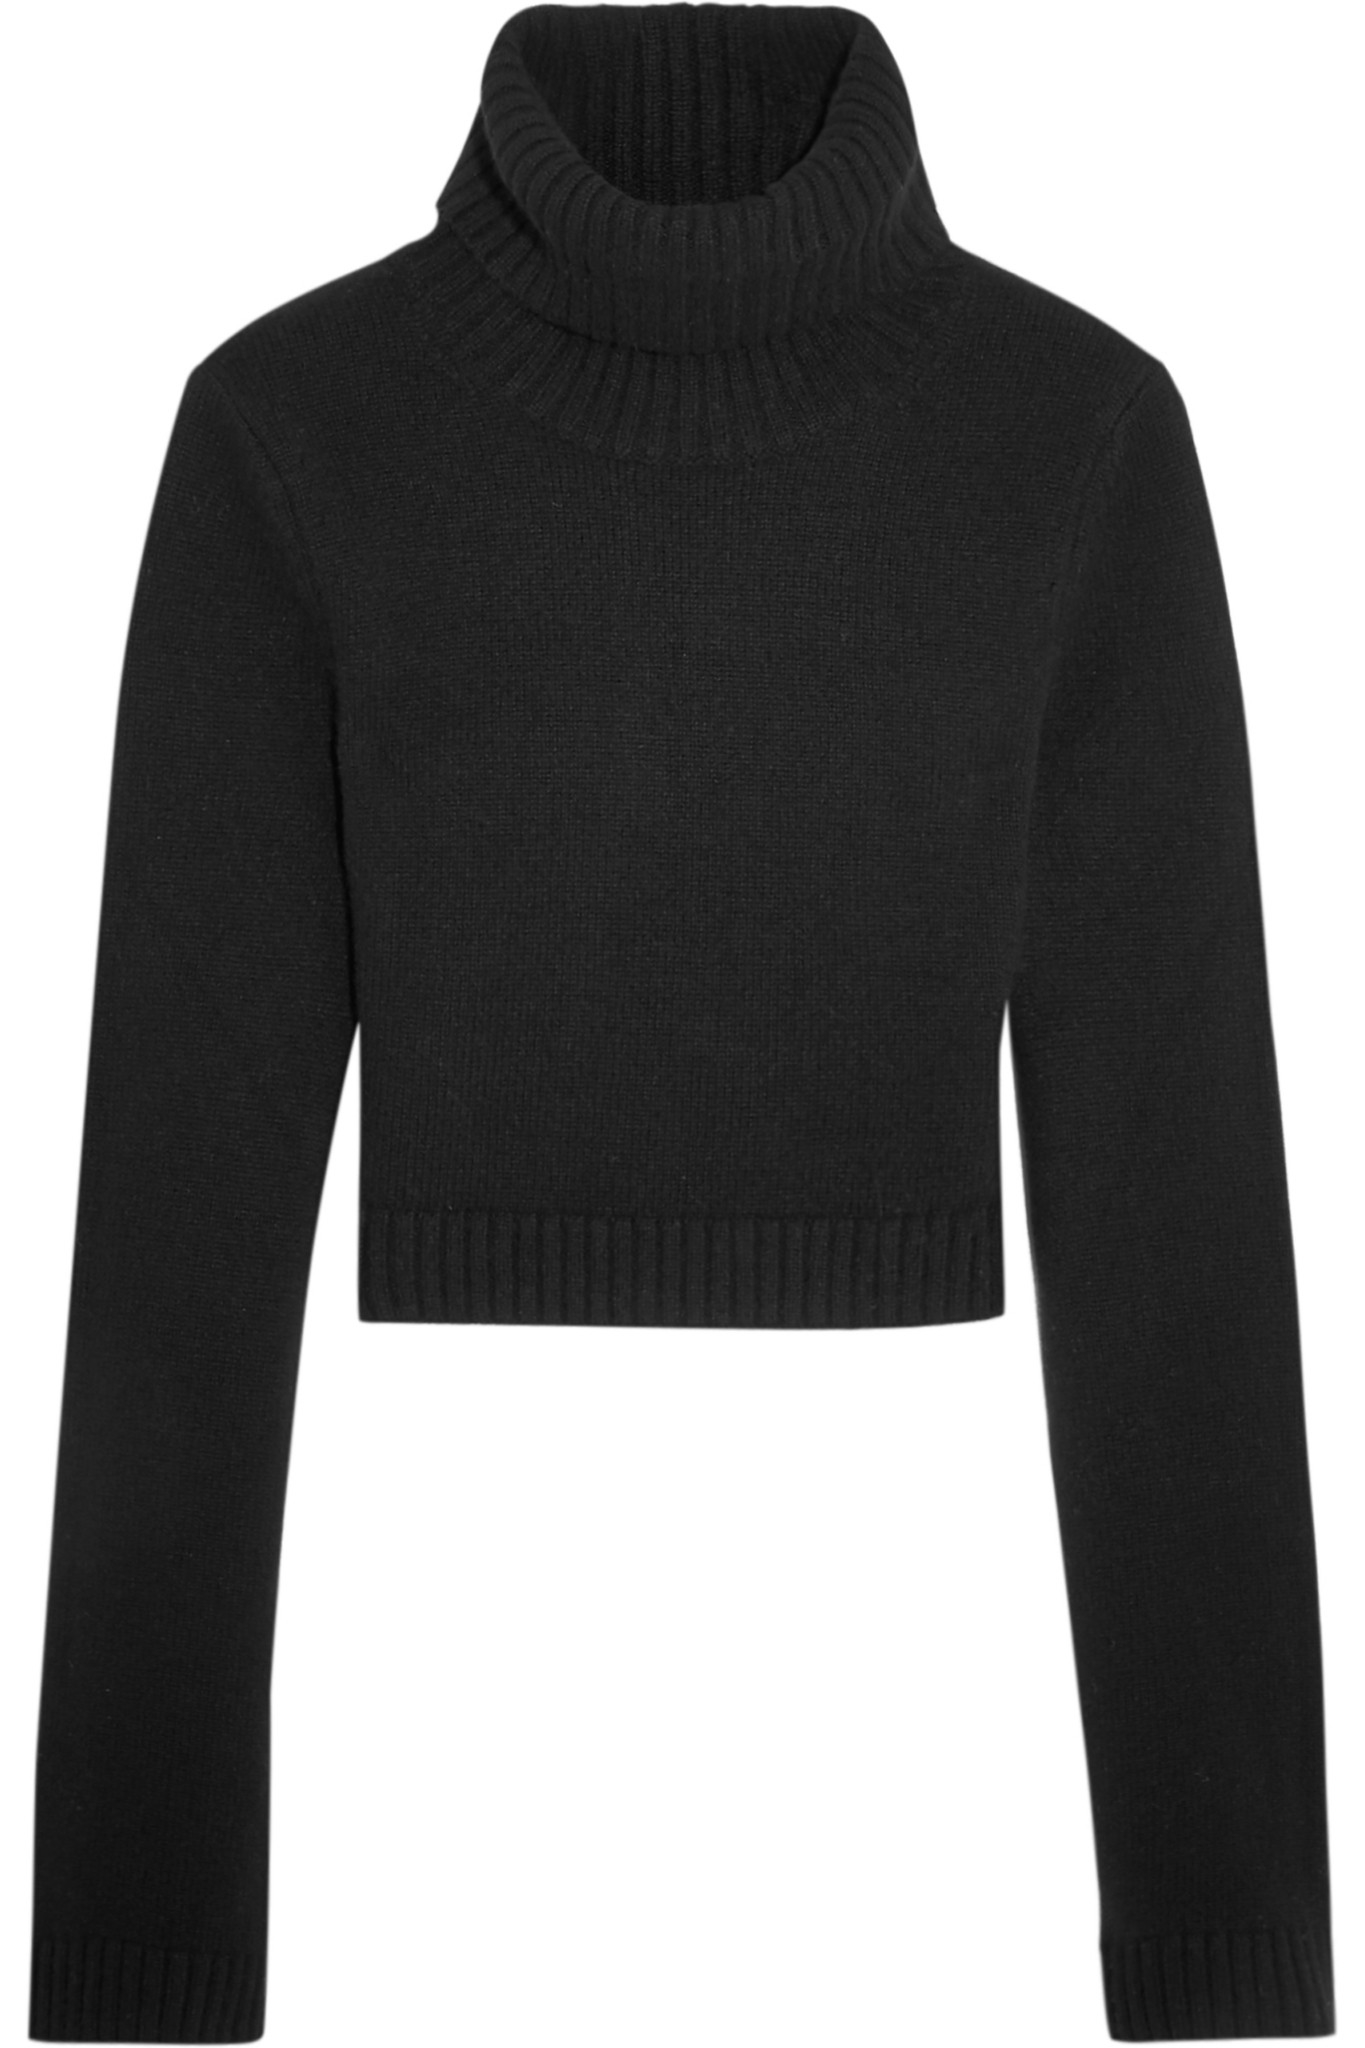 Michael Kors Cropped Cashmere Turtleneck Sweater in Black | Lyst UK